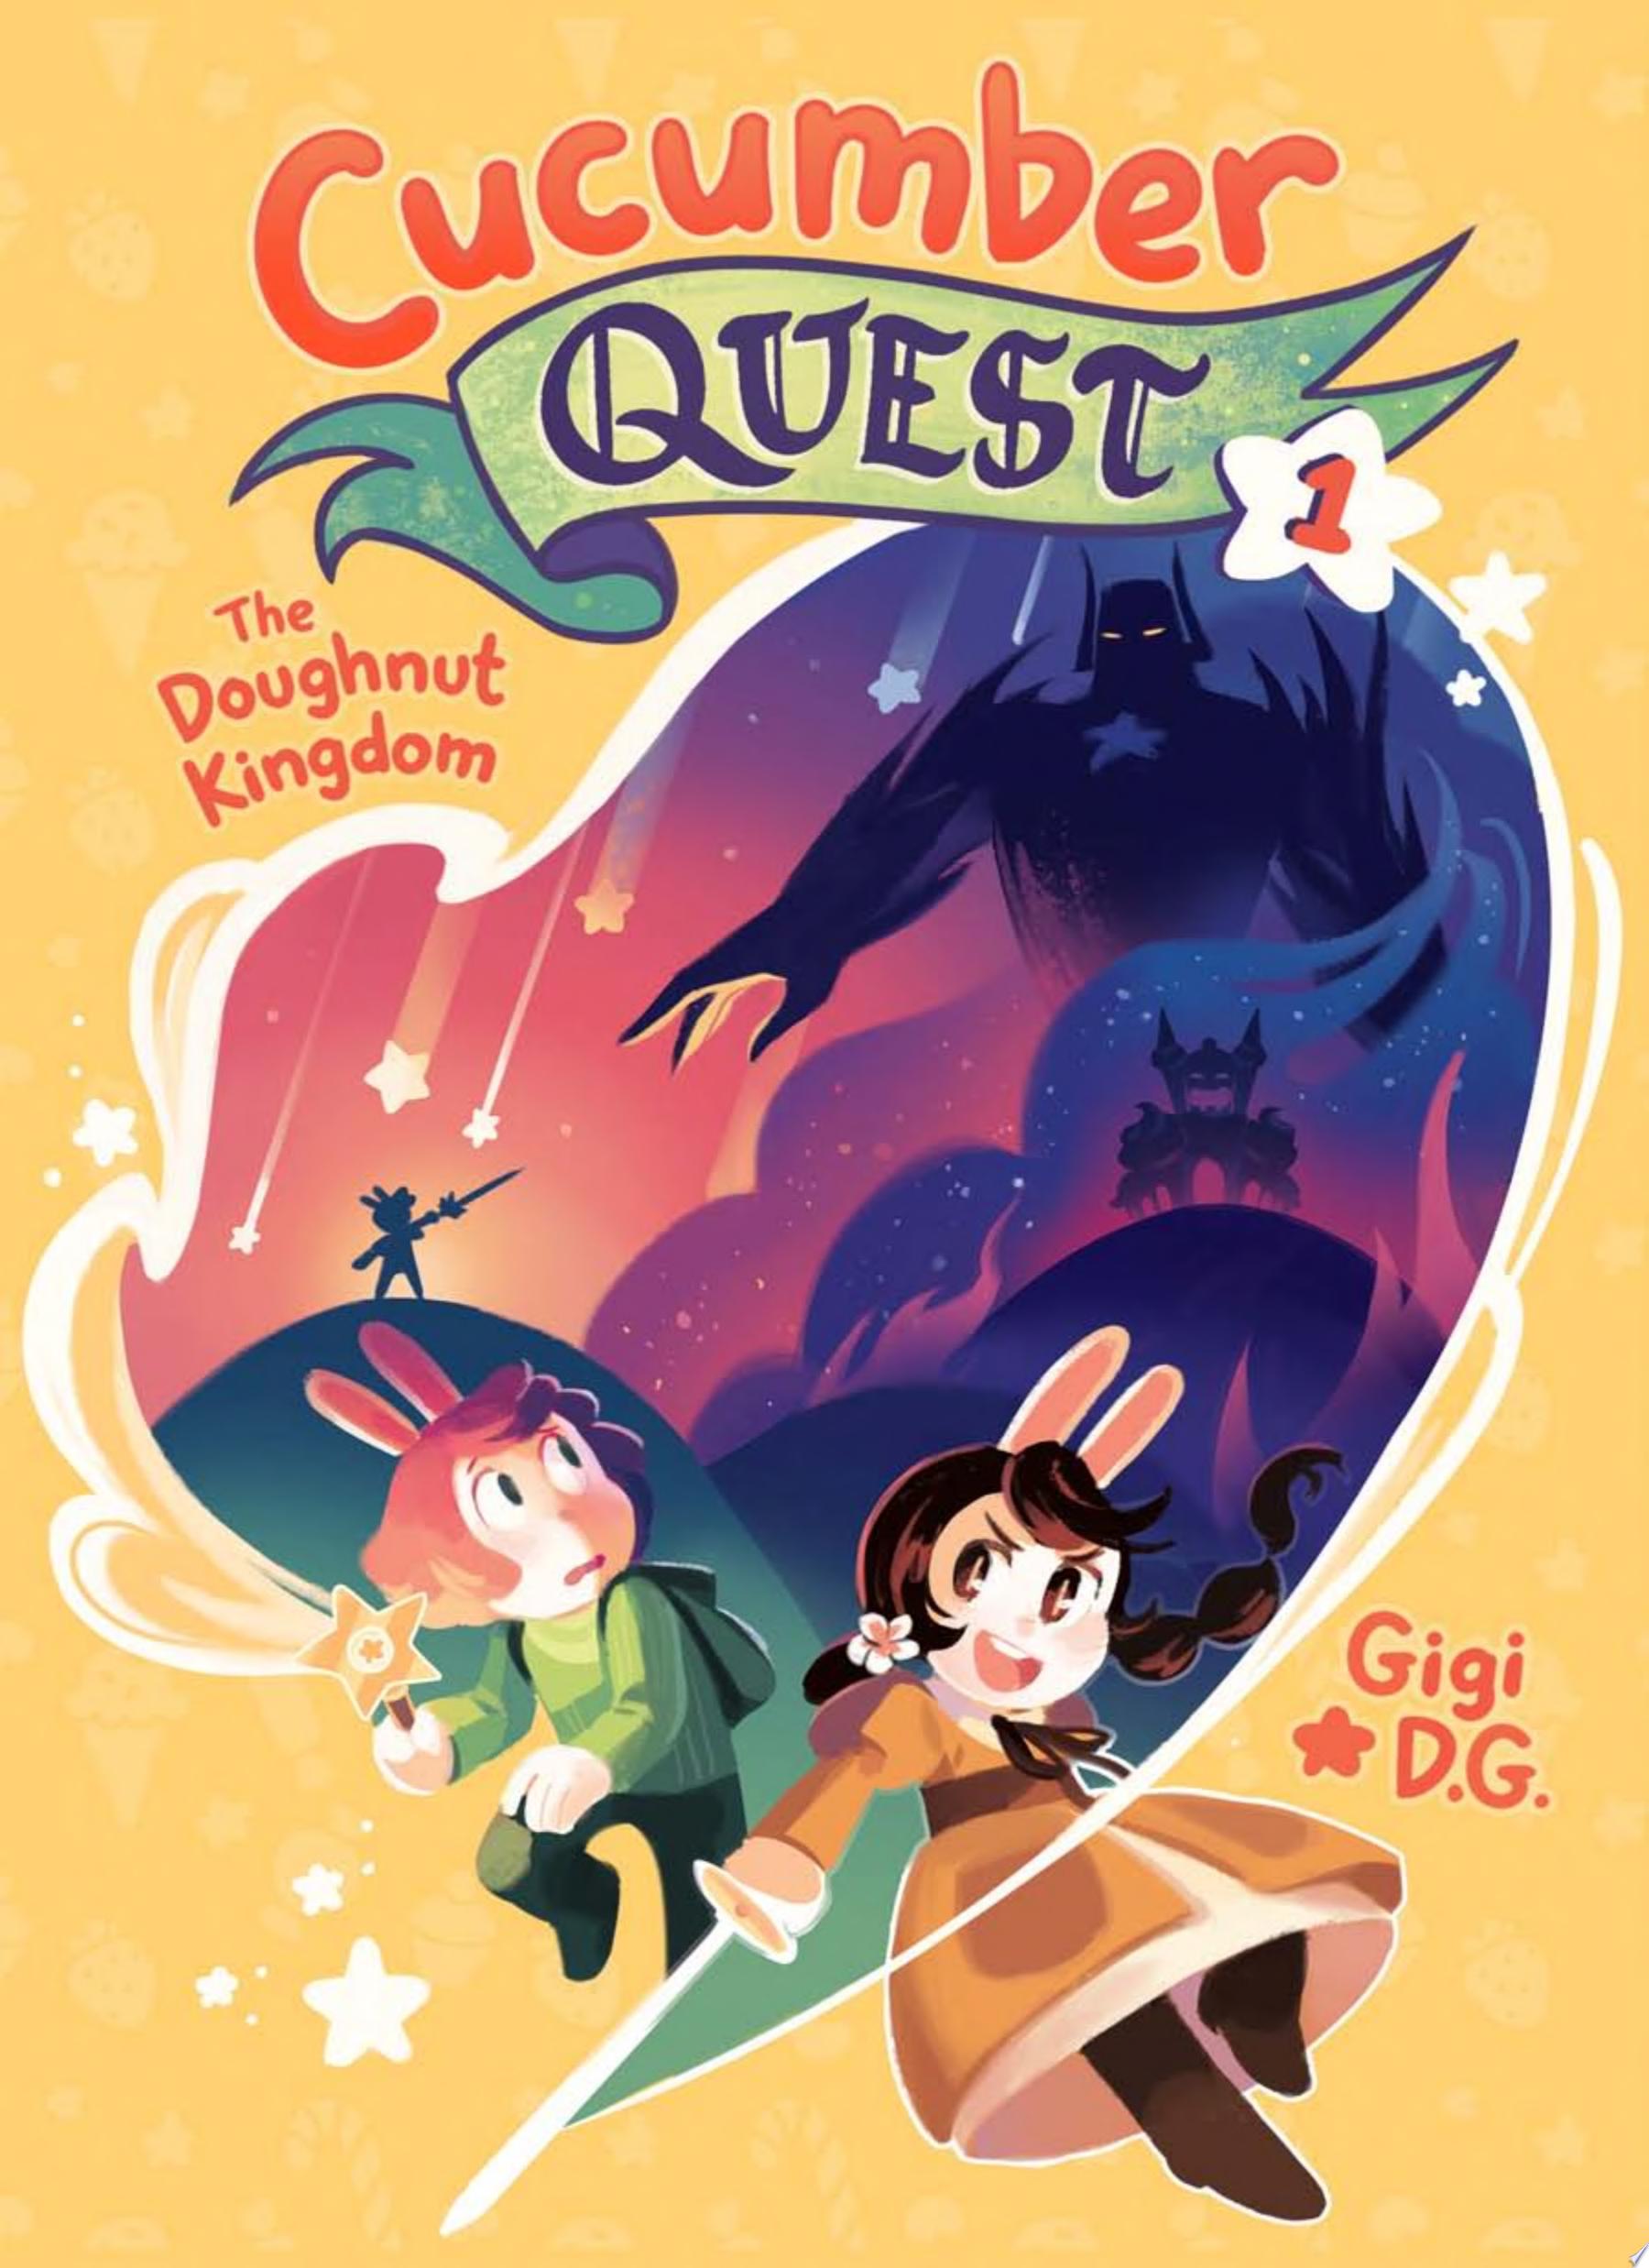 Image for "Cucumber Quest: The Doughnut Kingdom"